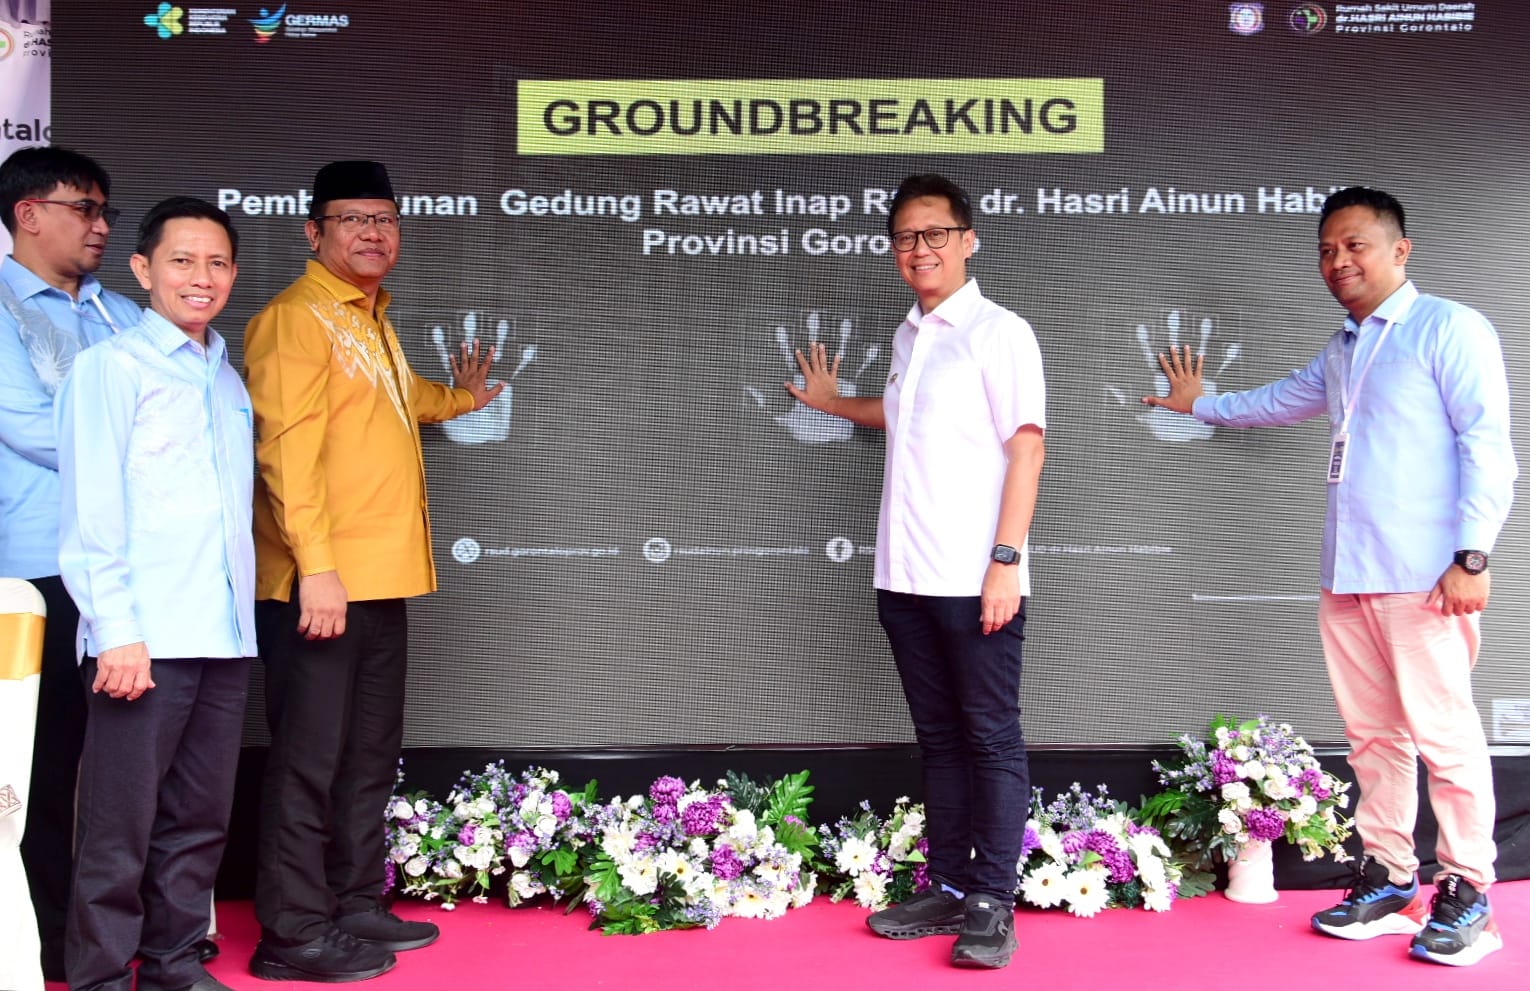  Menkes Canangkan Pembangunan Gedung Rawat Inap RSUD Ainun Gorontalo